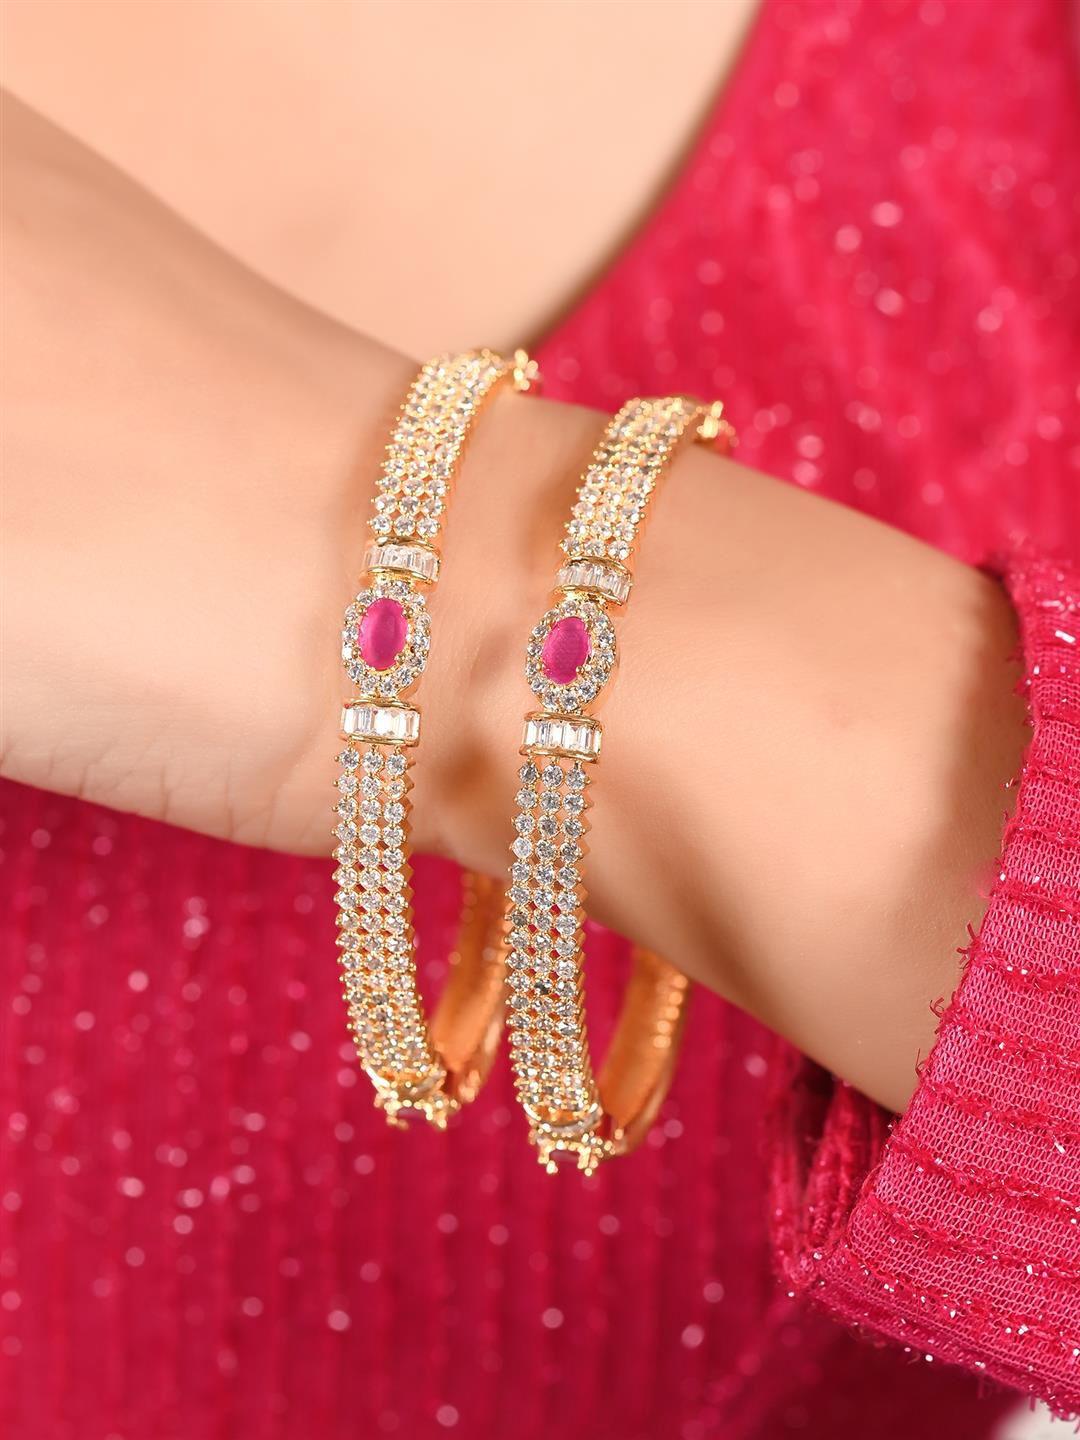 ratnavali jewels set of 2 gold-plated stone-studded bangles